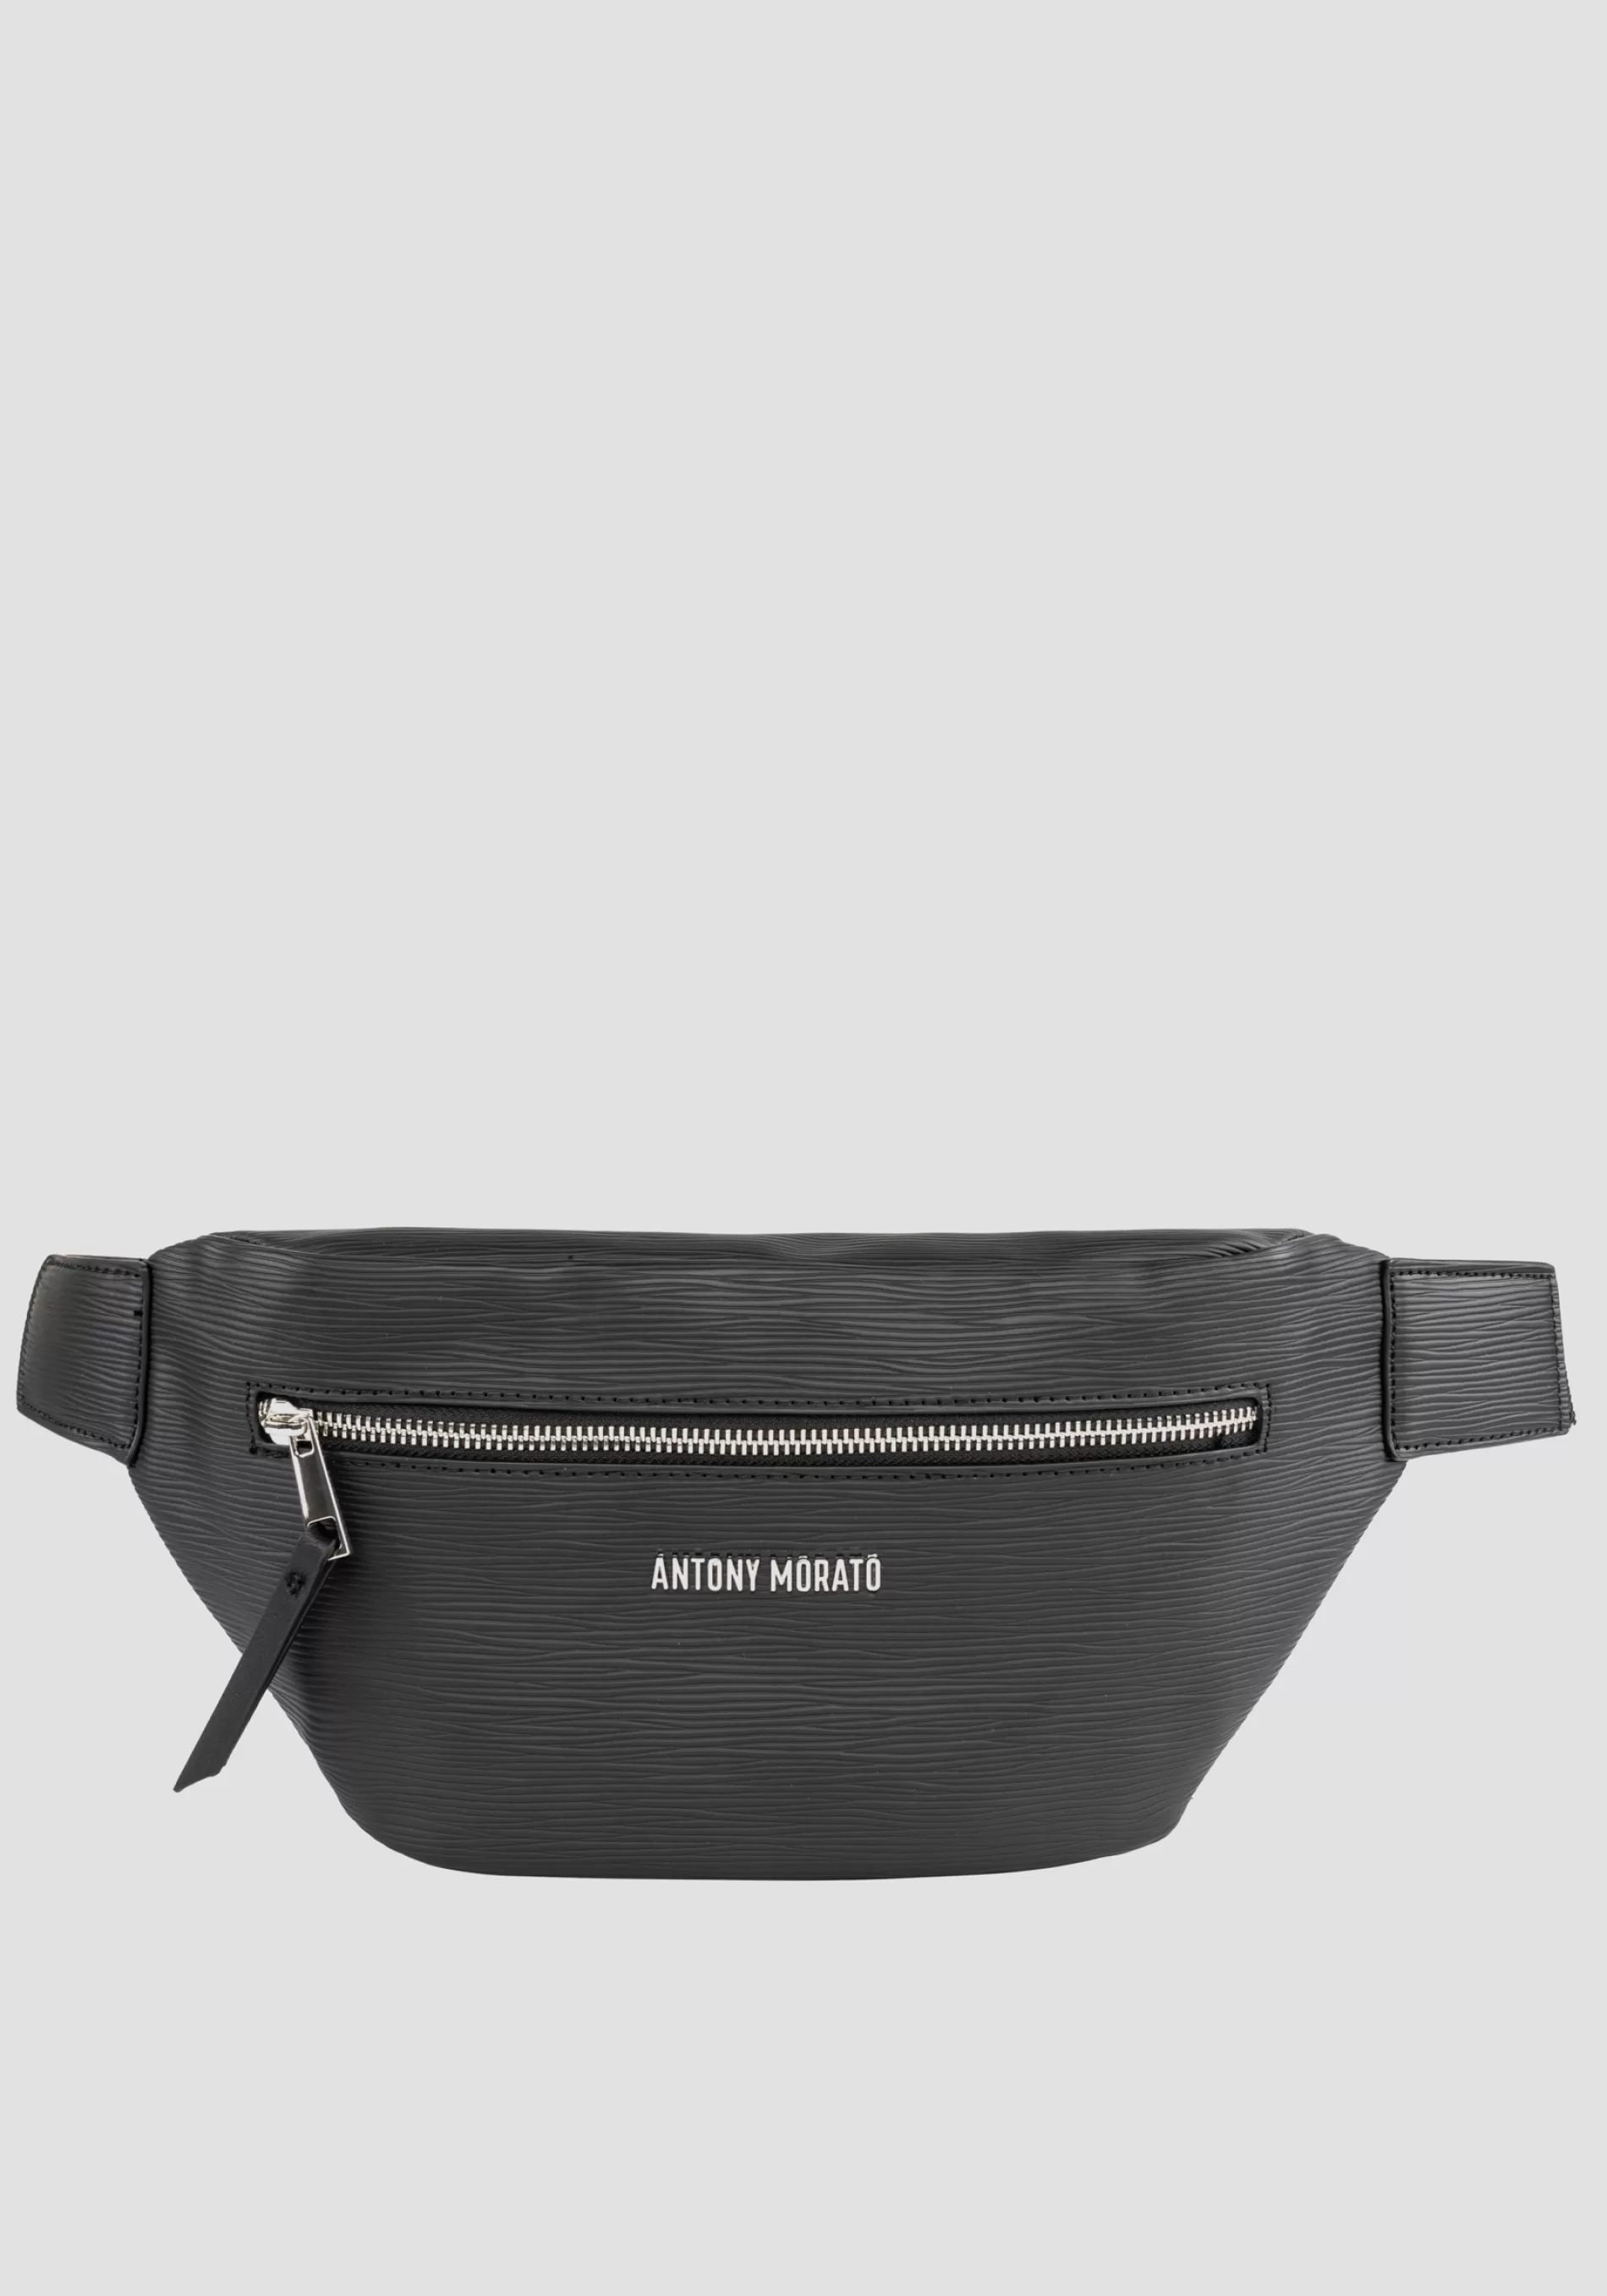 Sale SOLID COLOUR BUM BAG IN A PALMELLATO EFFECT FABRIC Handbags